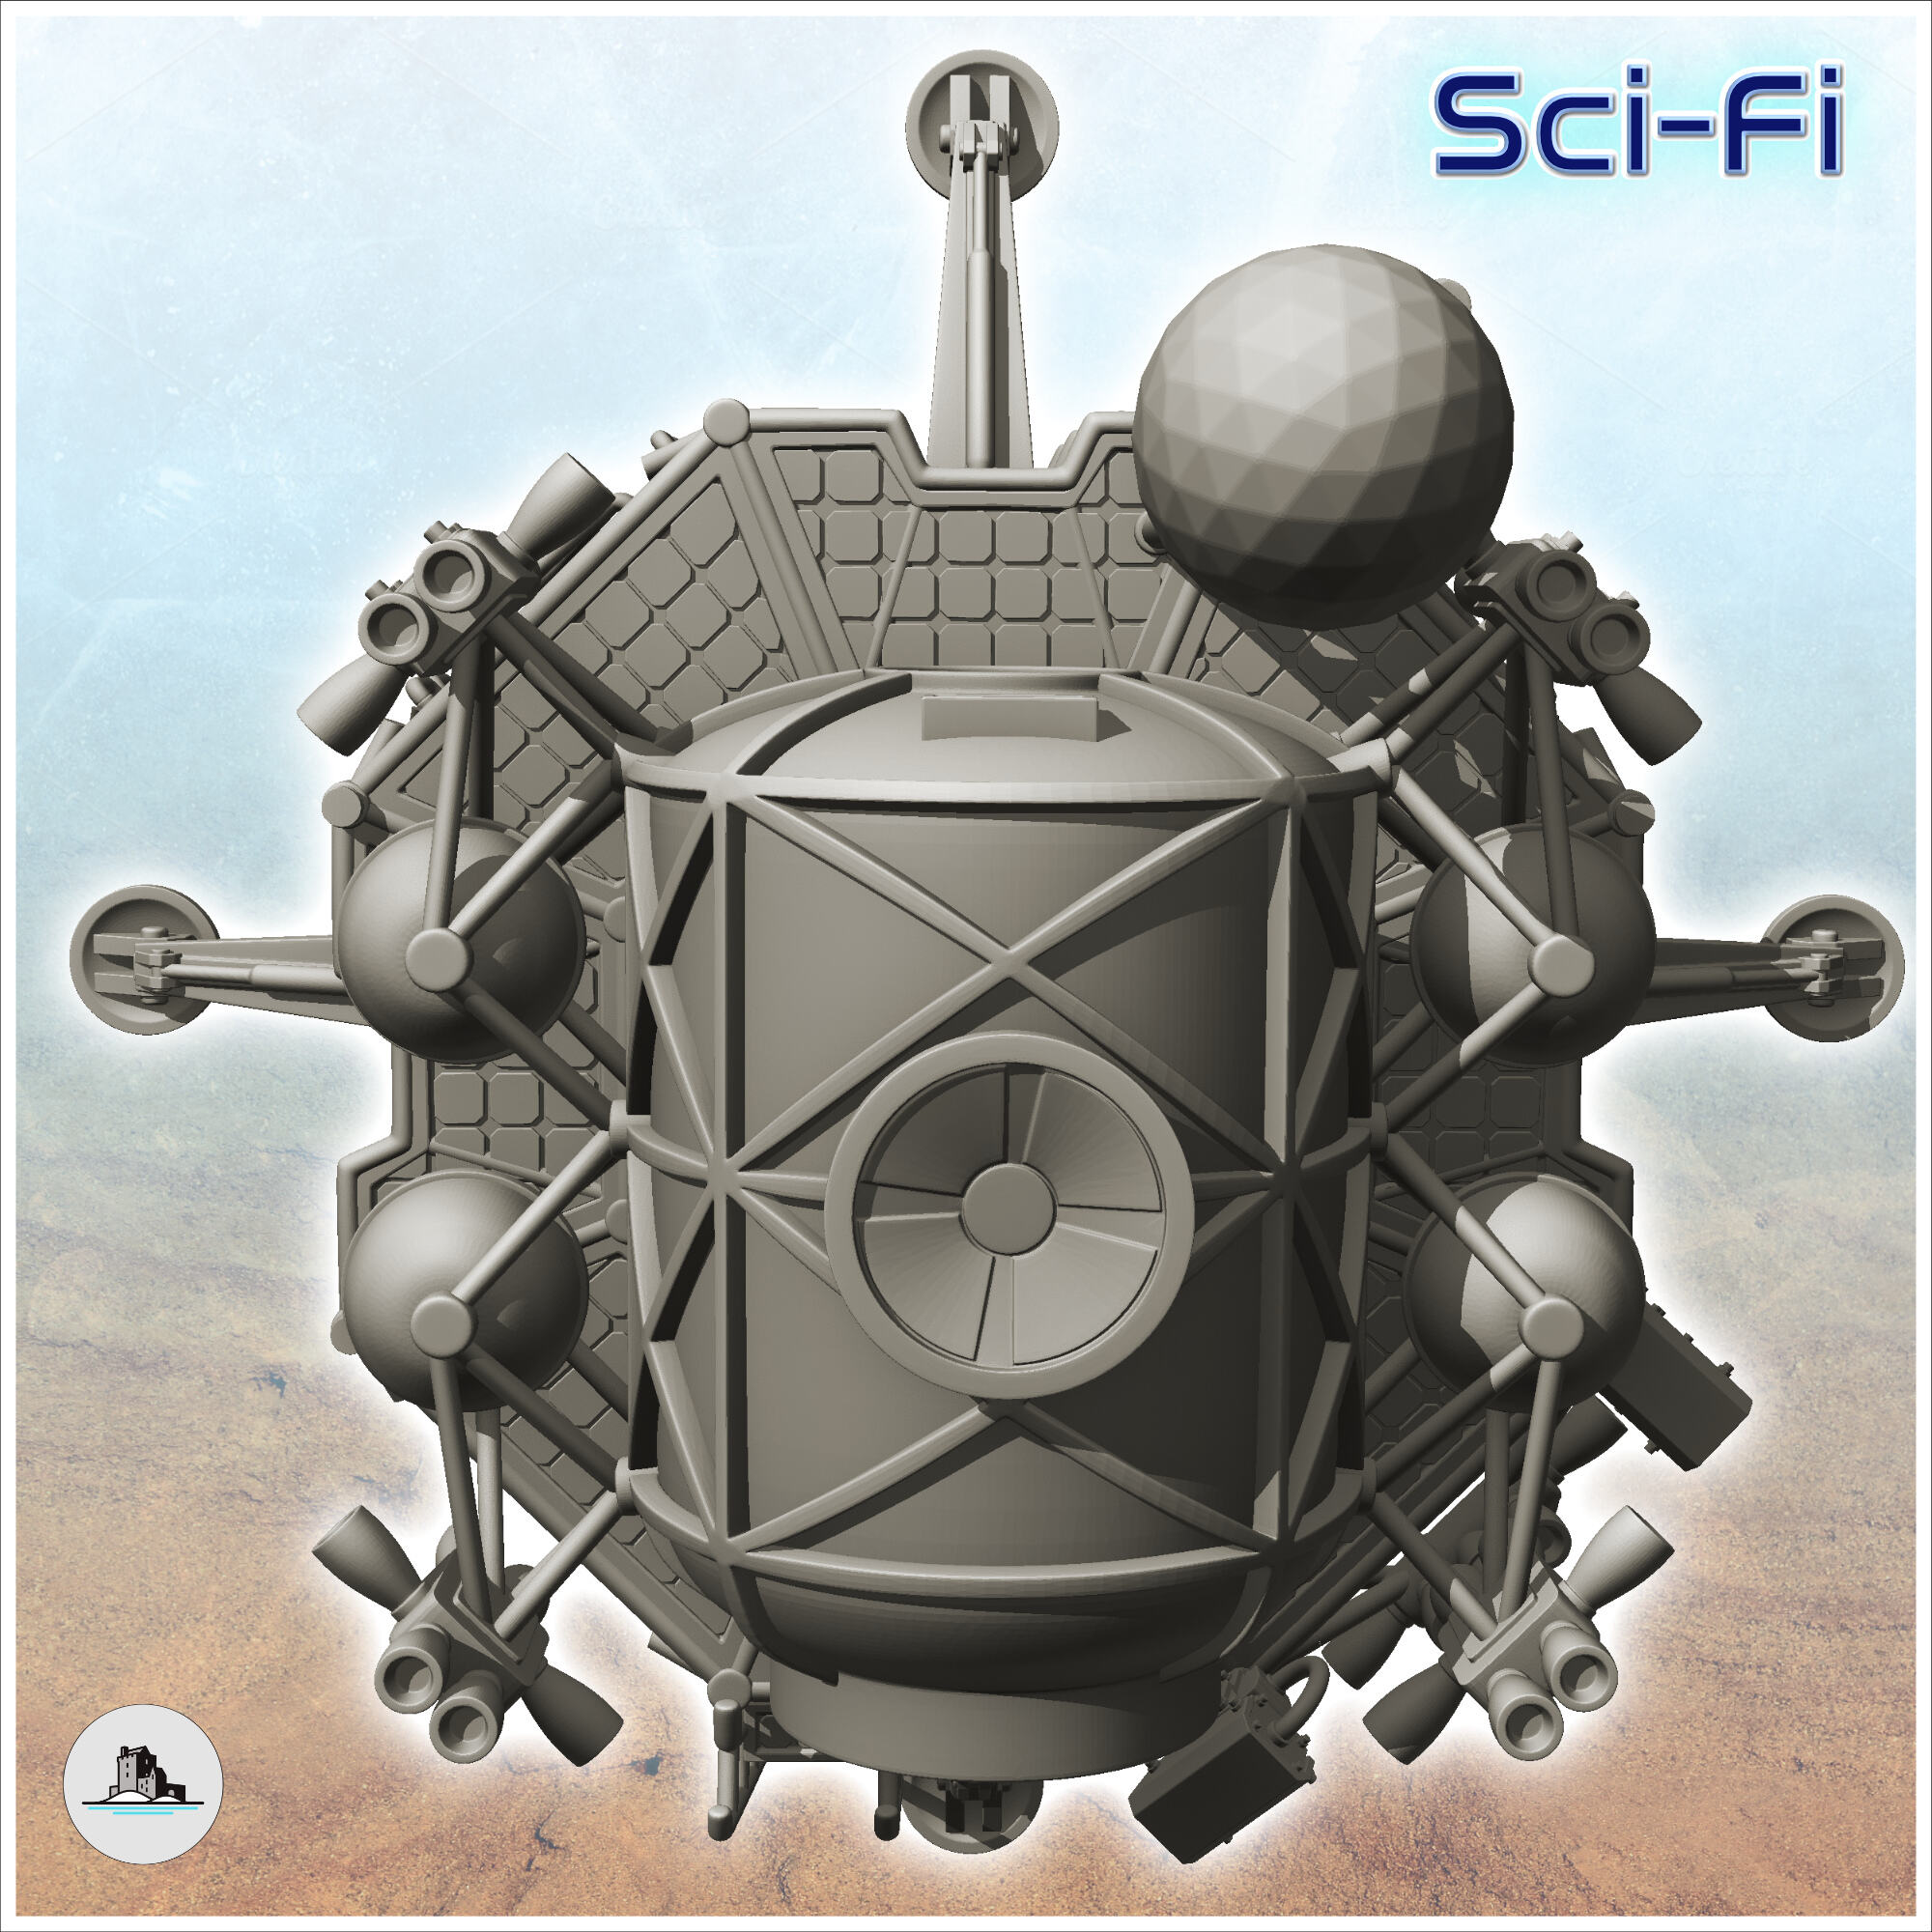 Space exploration probe - Terrain Scifi Science fiction SF